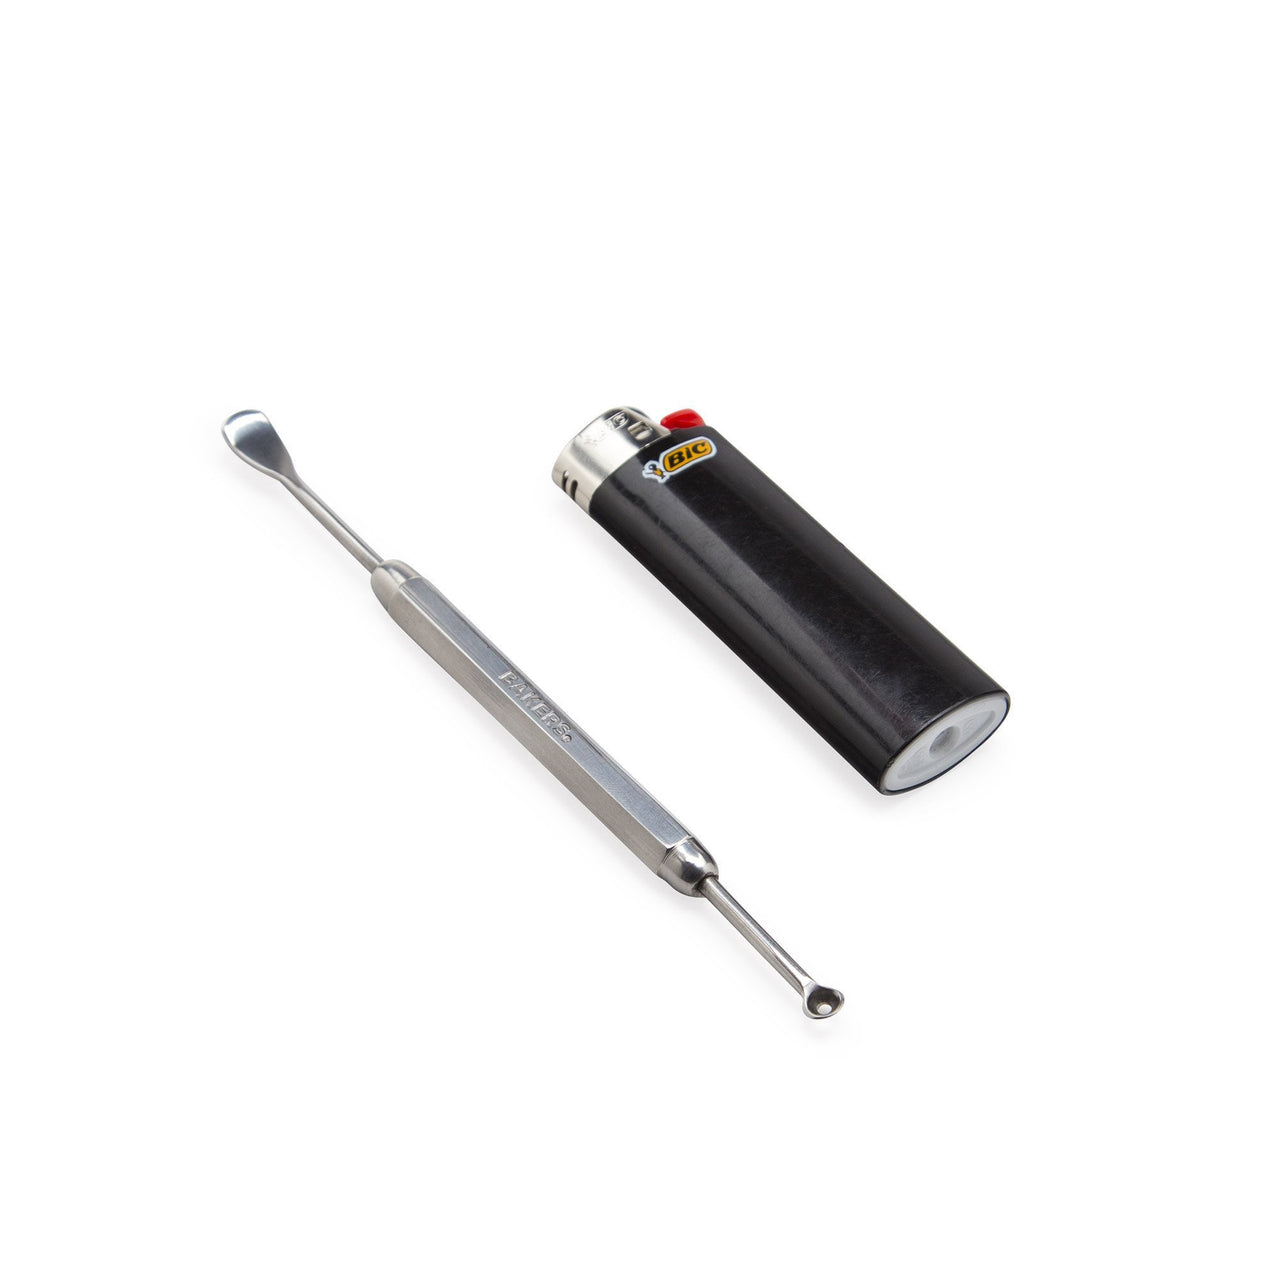 Bran-New 420 DAB Tools Smoking Accessories Pick Wax Tweezer Dabber